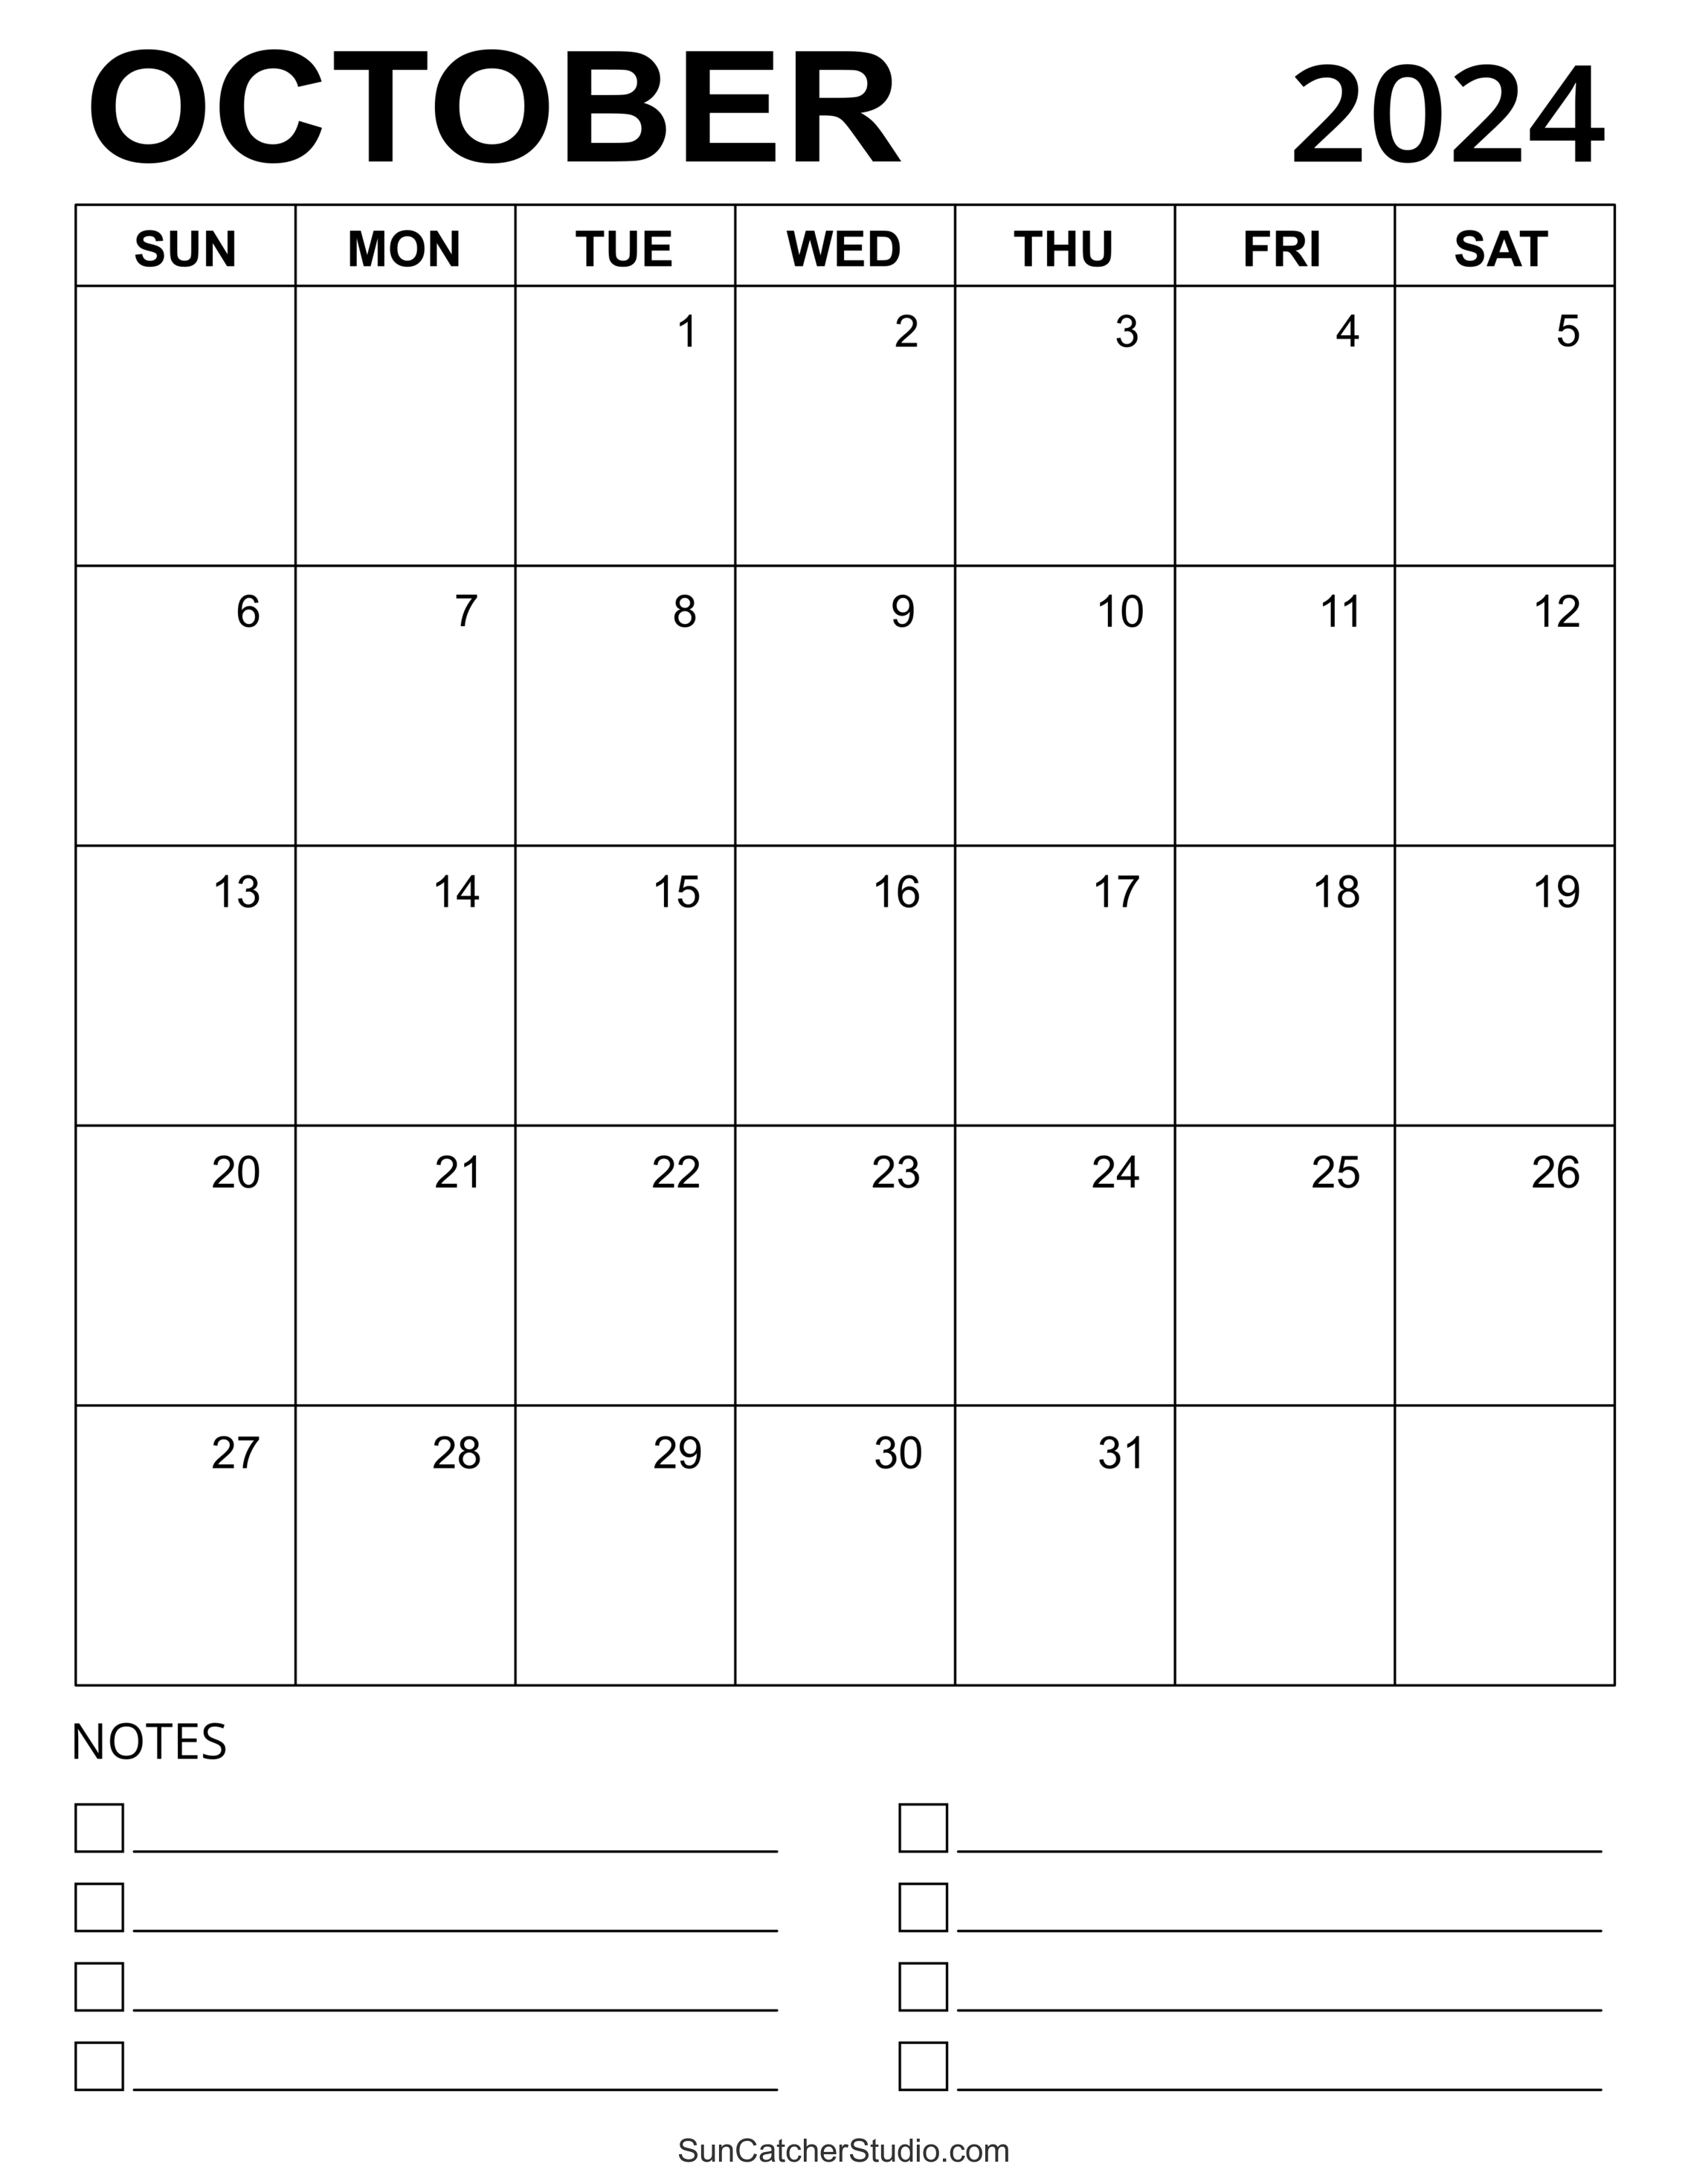 October 2024 Calendars - 50 FREE Printables